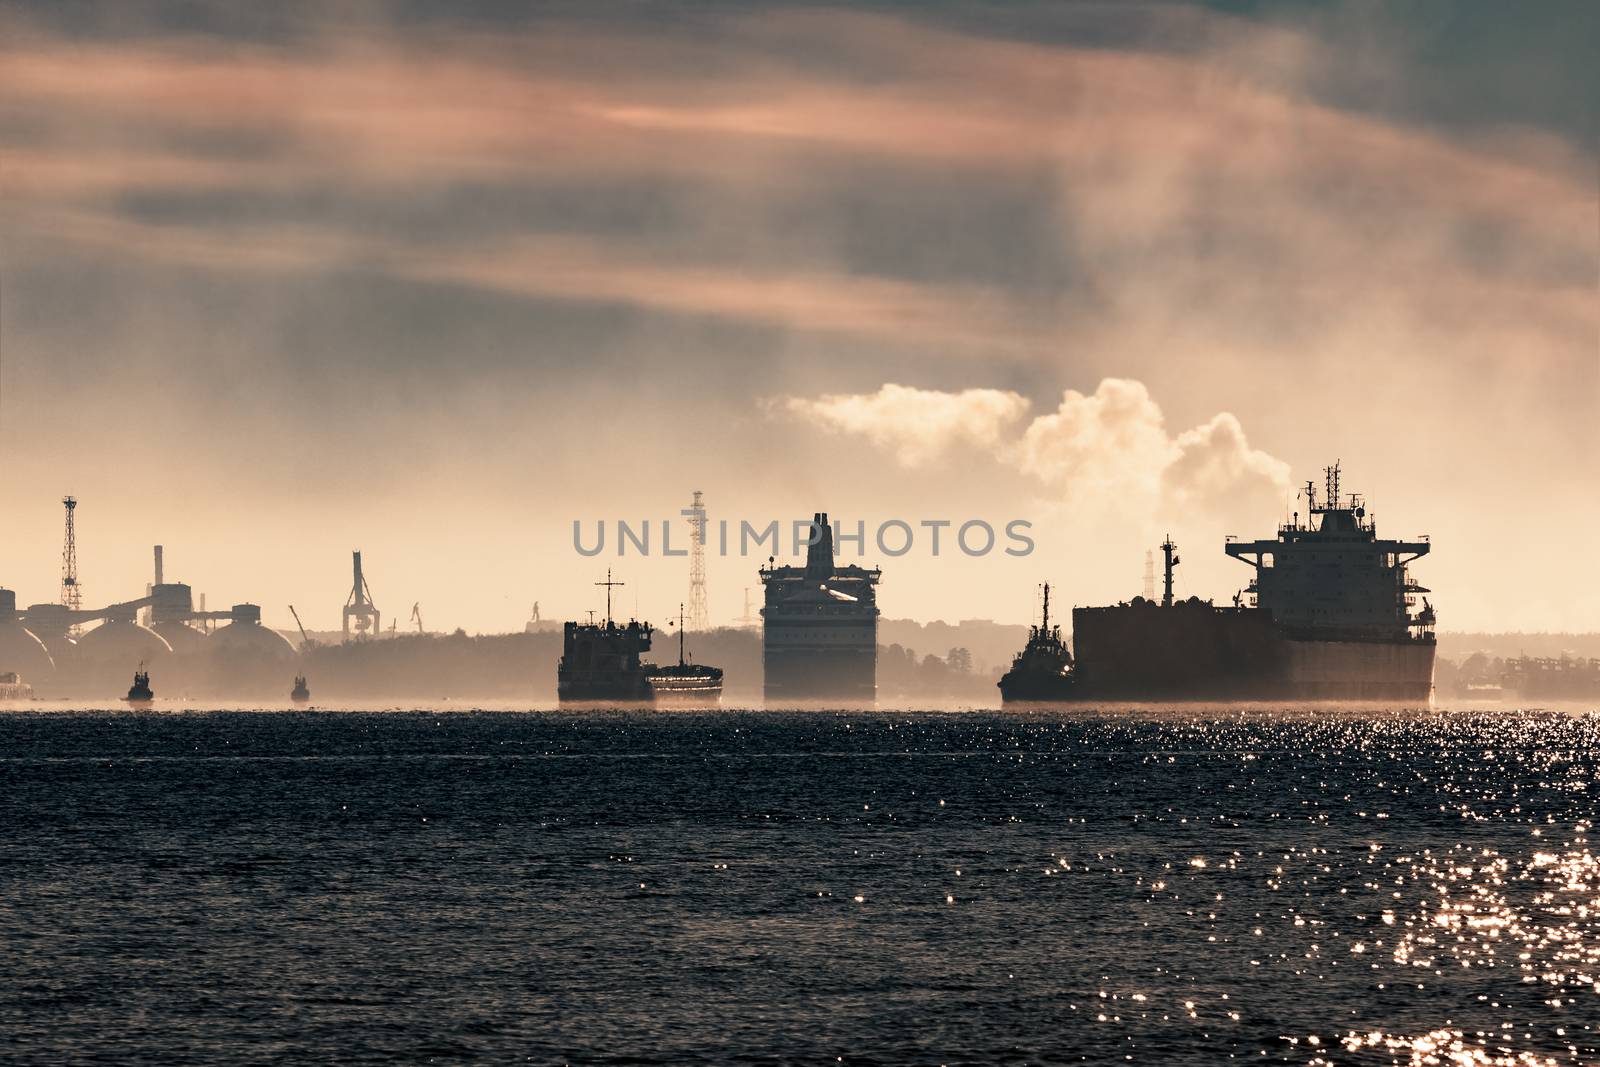 Cargo ship silhouette entering a port of Riga at the morning